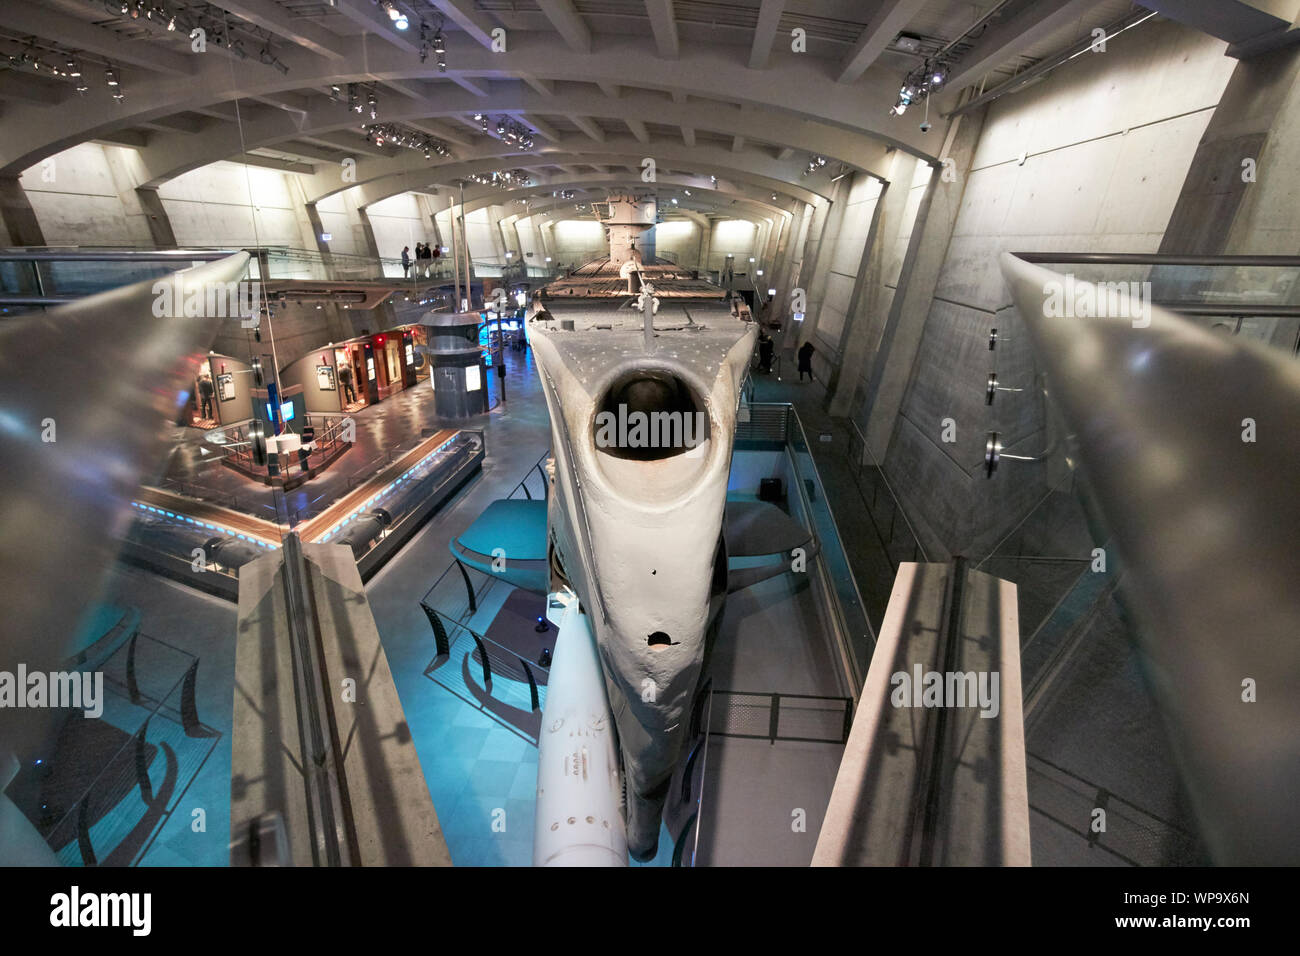 u-505 german submarine exhibit display museum of science and industry Chicago Illinois USA Stock Photo